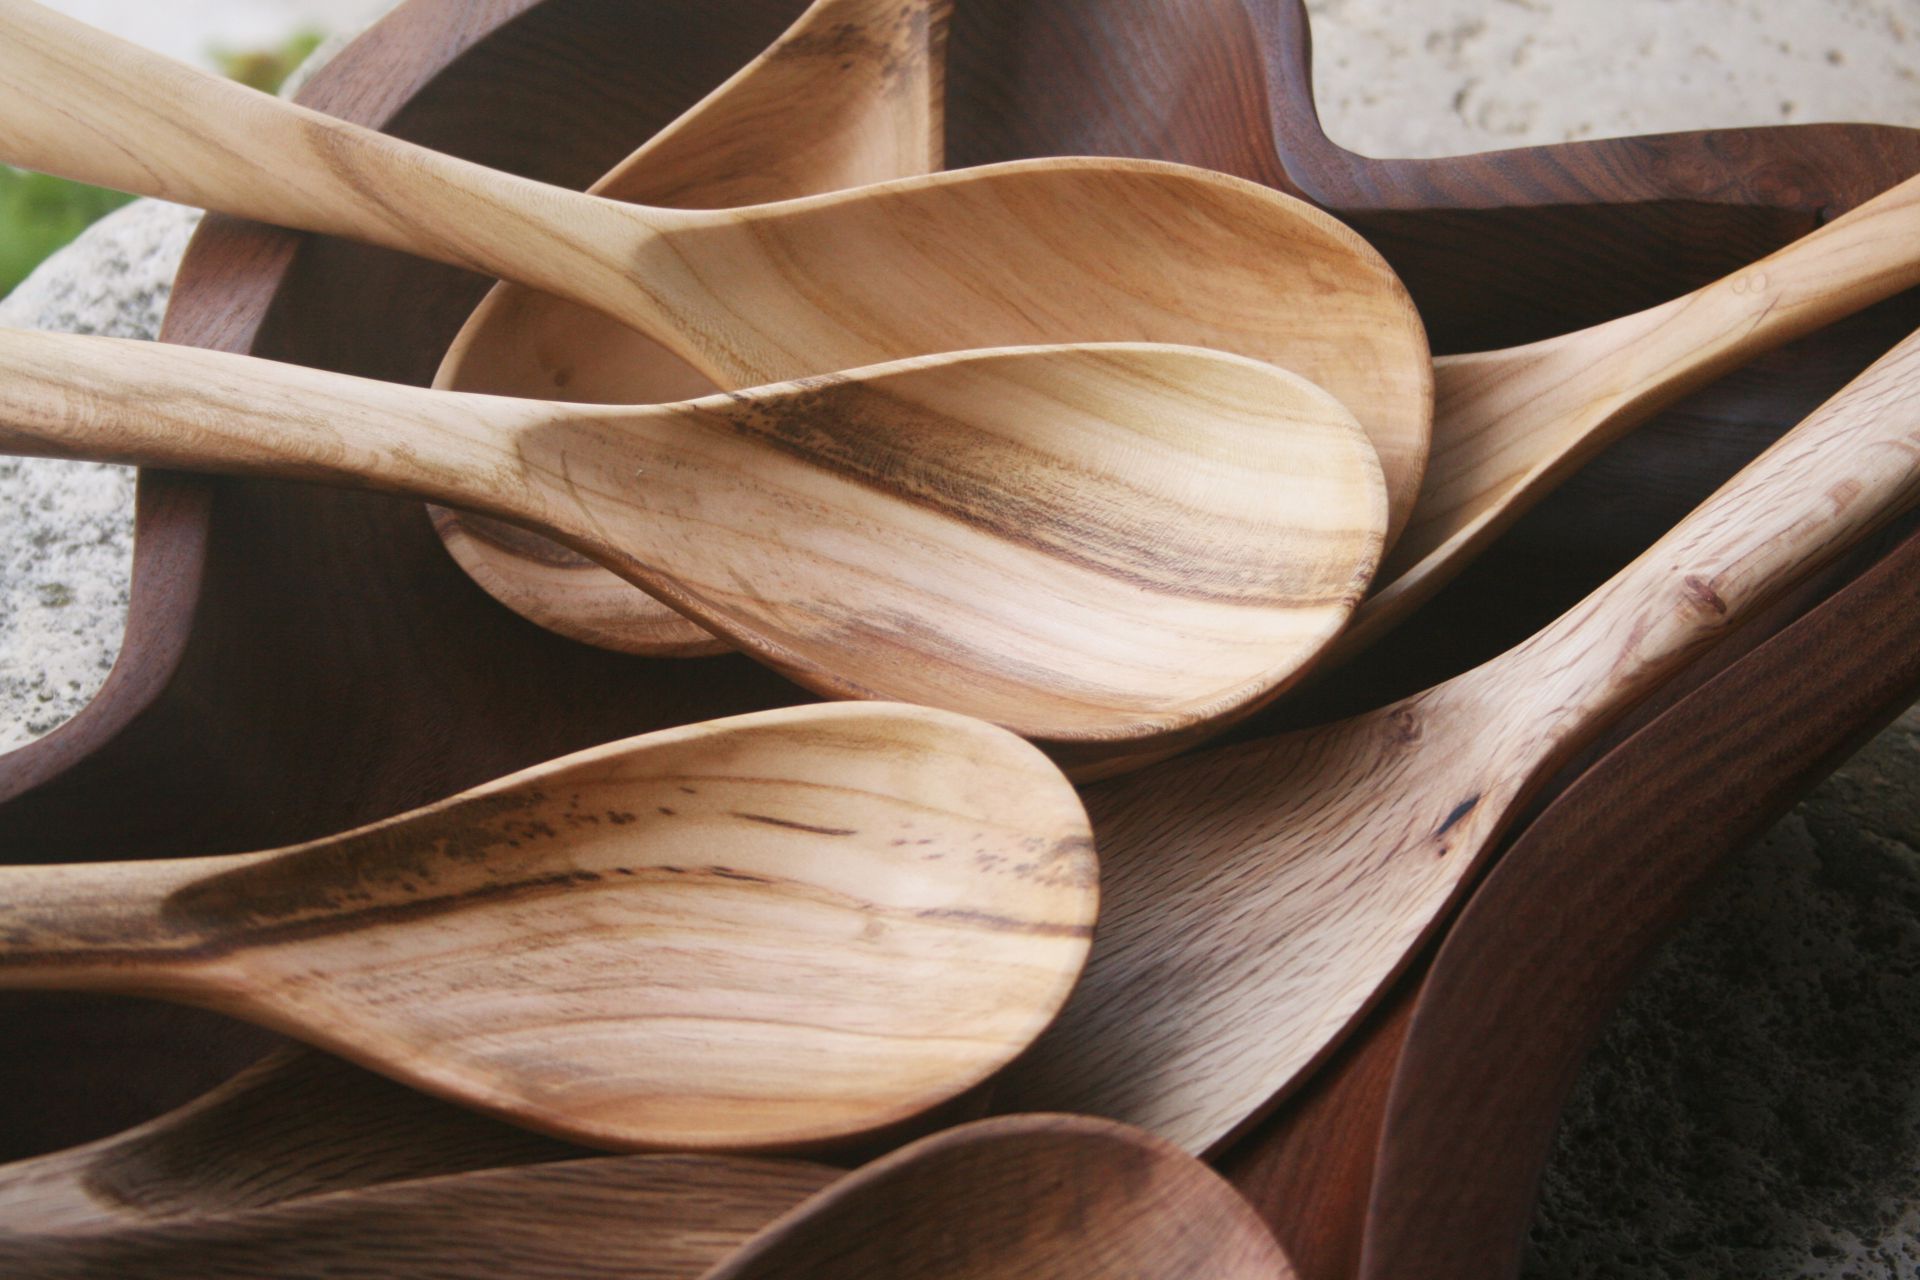 apricot wood spoons ladles unique handmade sanisio artist design home detail kitchen accessories